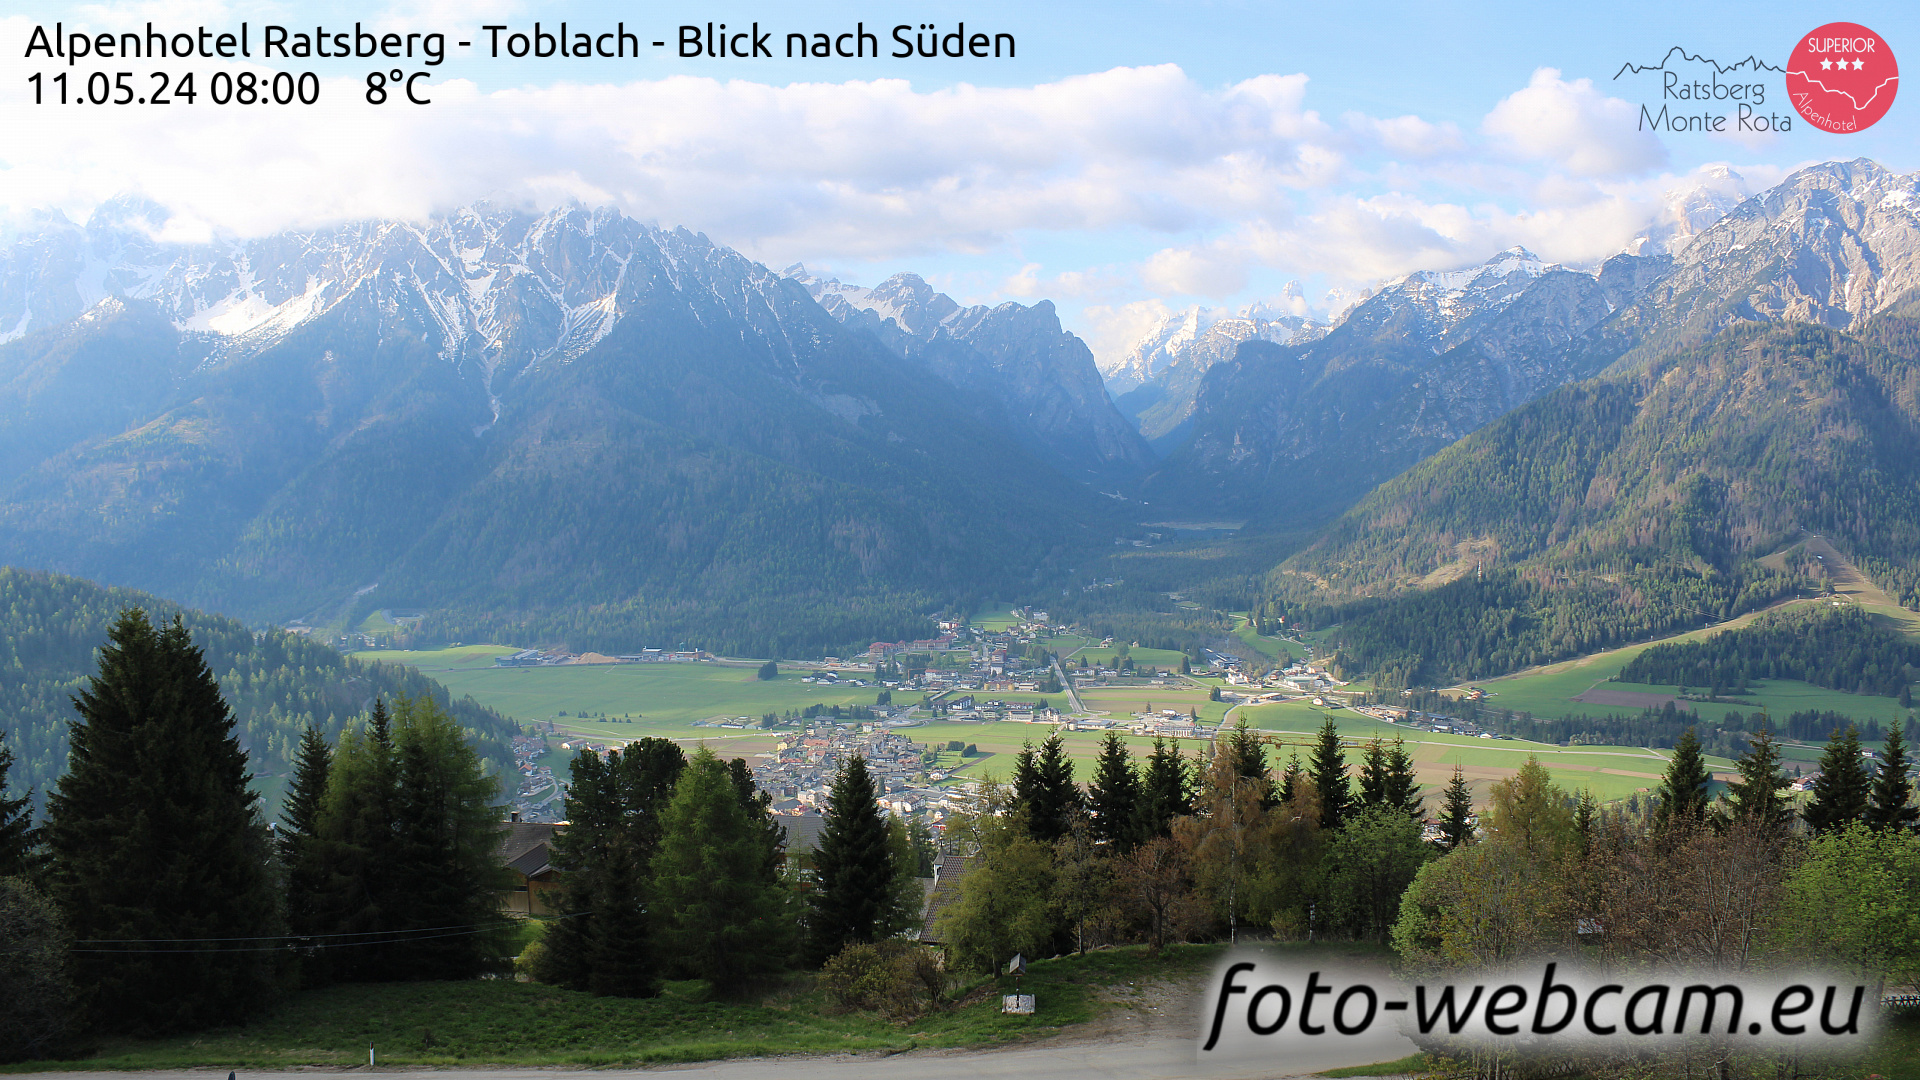 Toblach (Dolomites) Thu. 08:03